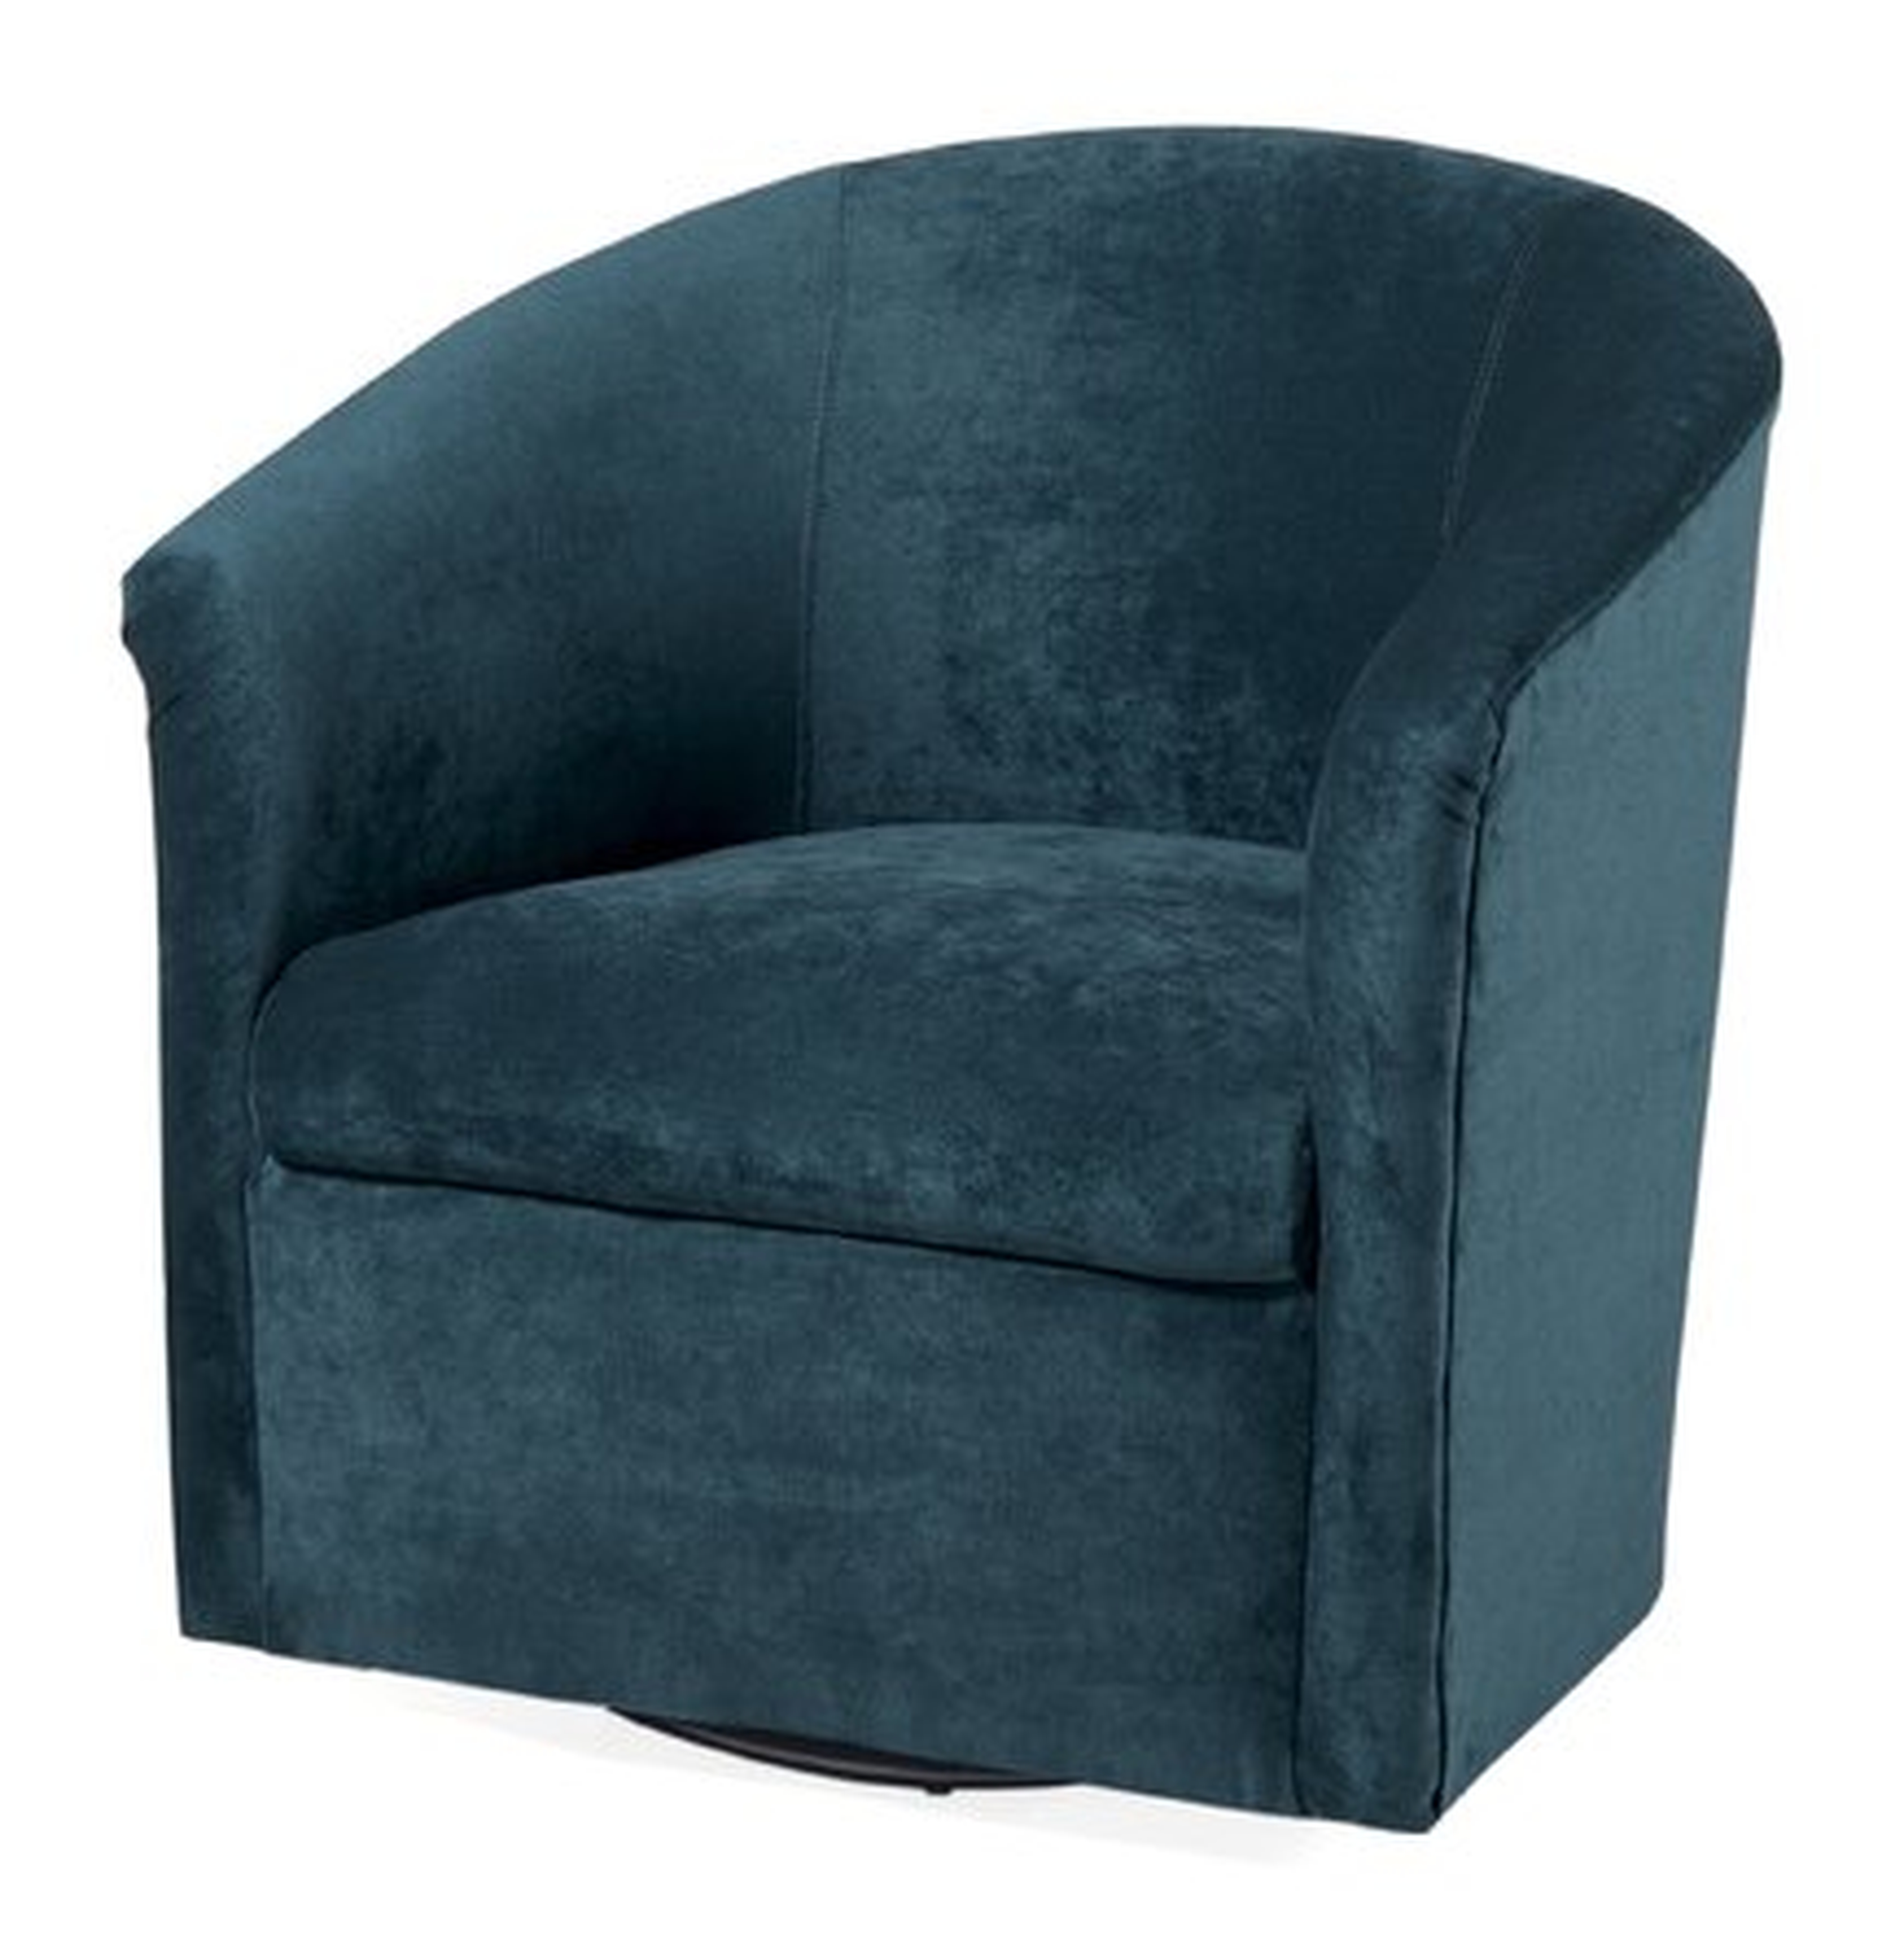 Calliope 29.75" Wide Swivel Barrel Chair, Teal - Wayfair